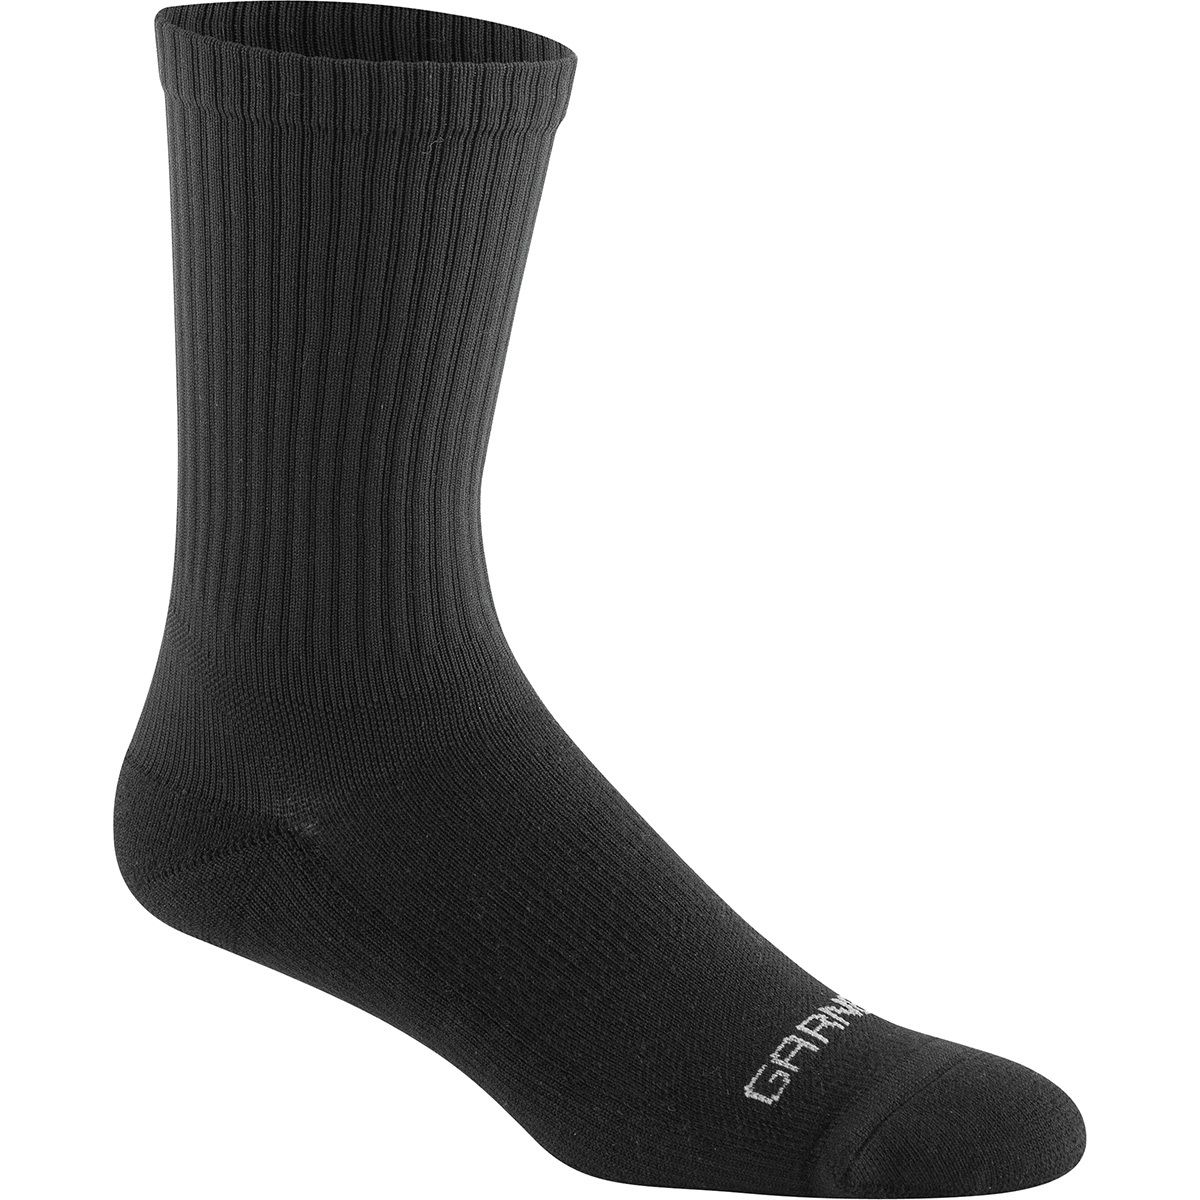 Louis Garneau Ribz Sock - Men's